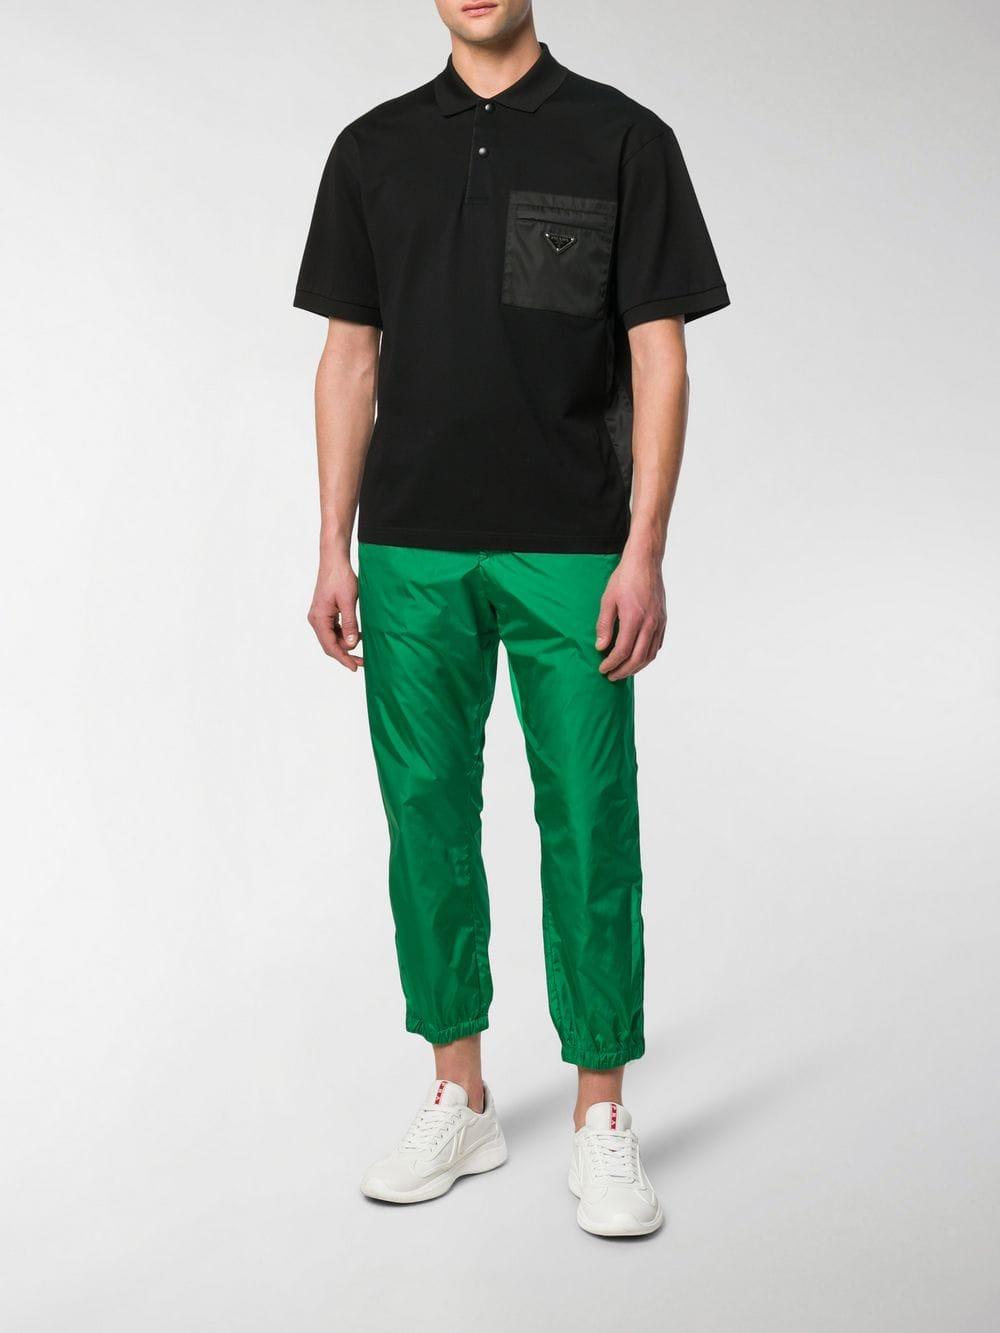 Prada Drawstring Track Pants in Green for Men - Lyst